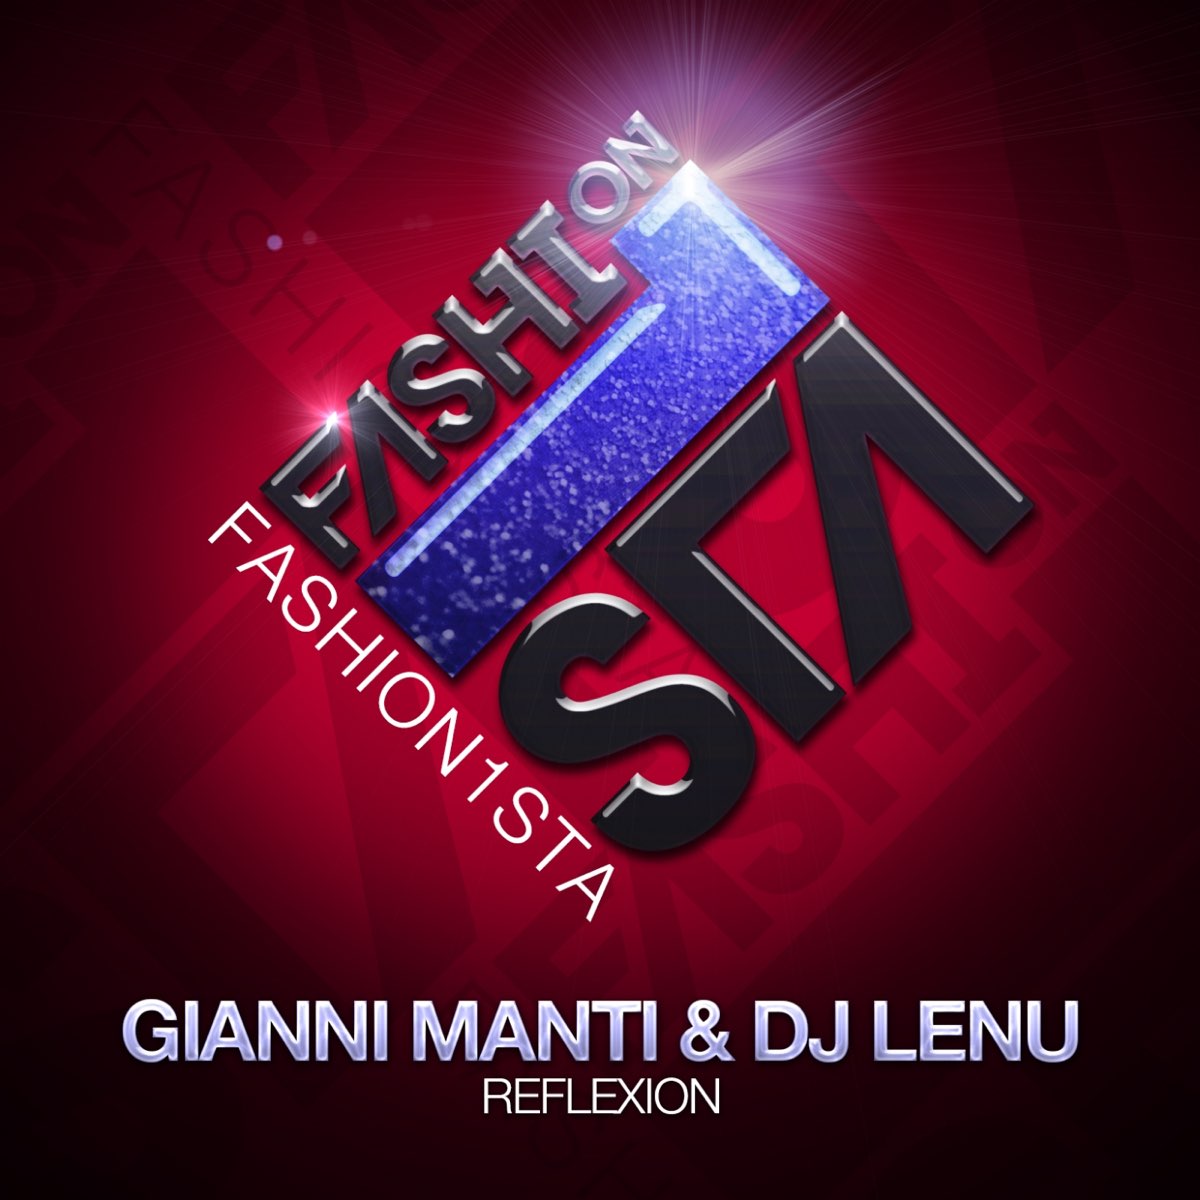 Reflexion - Single by Gianni Manti & DJ Lenu on Apple Music